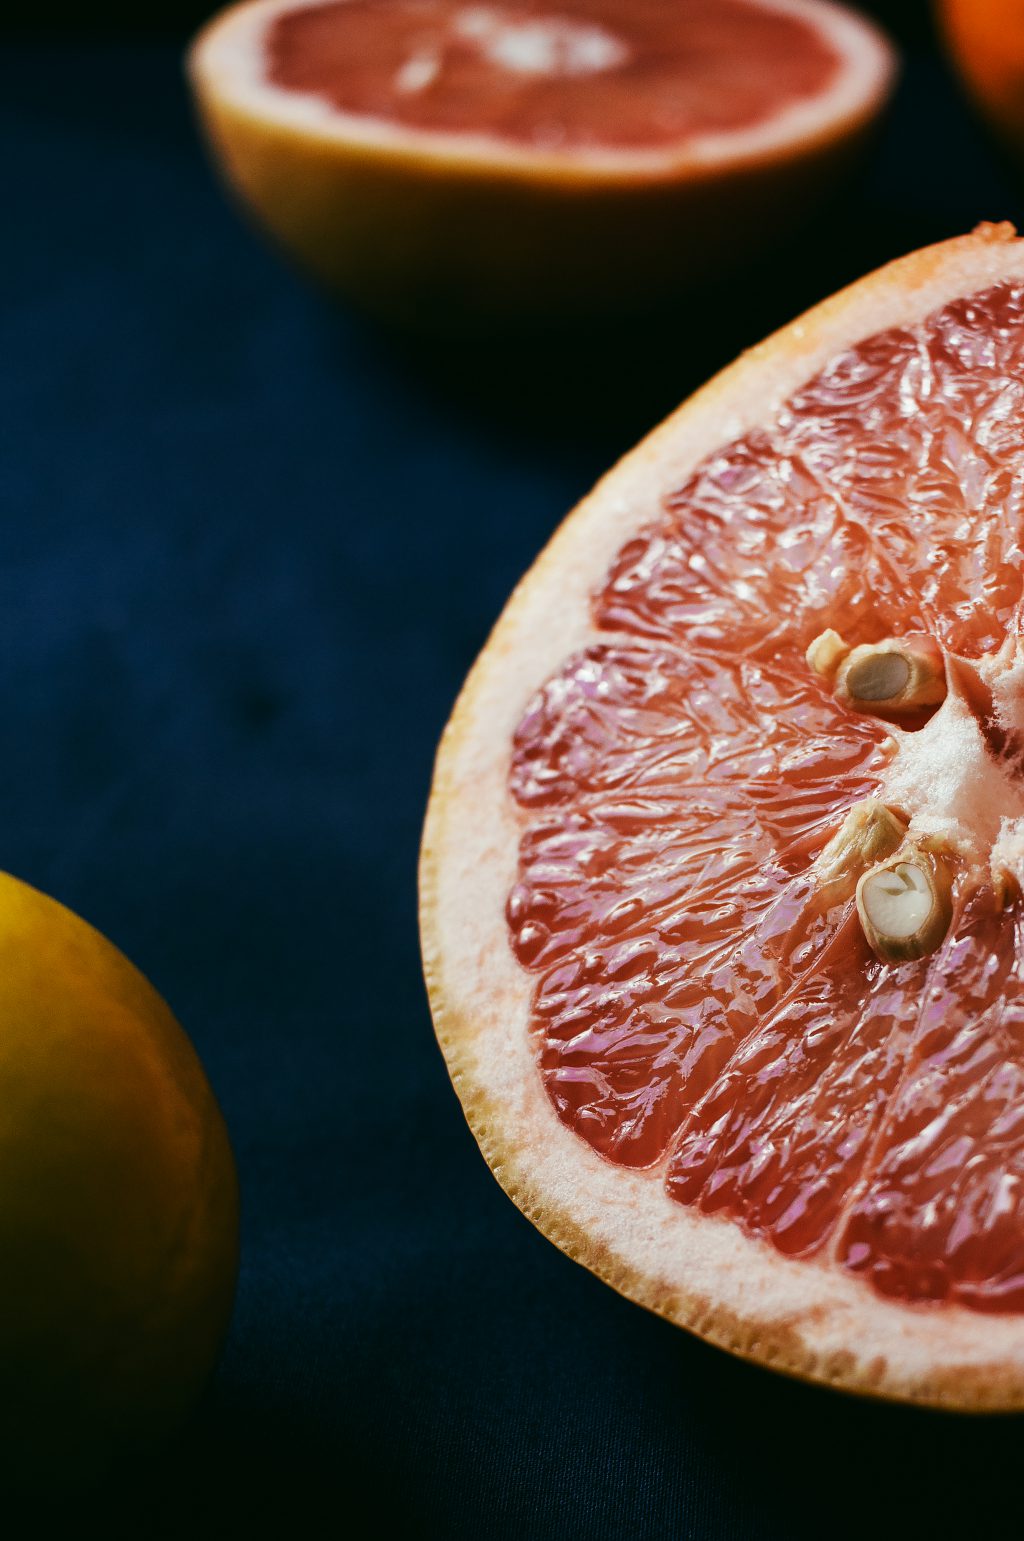 Grapefruits cut in half - free stock photo